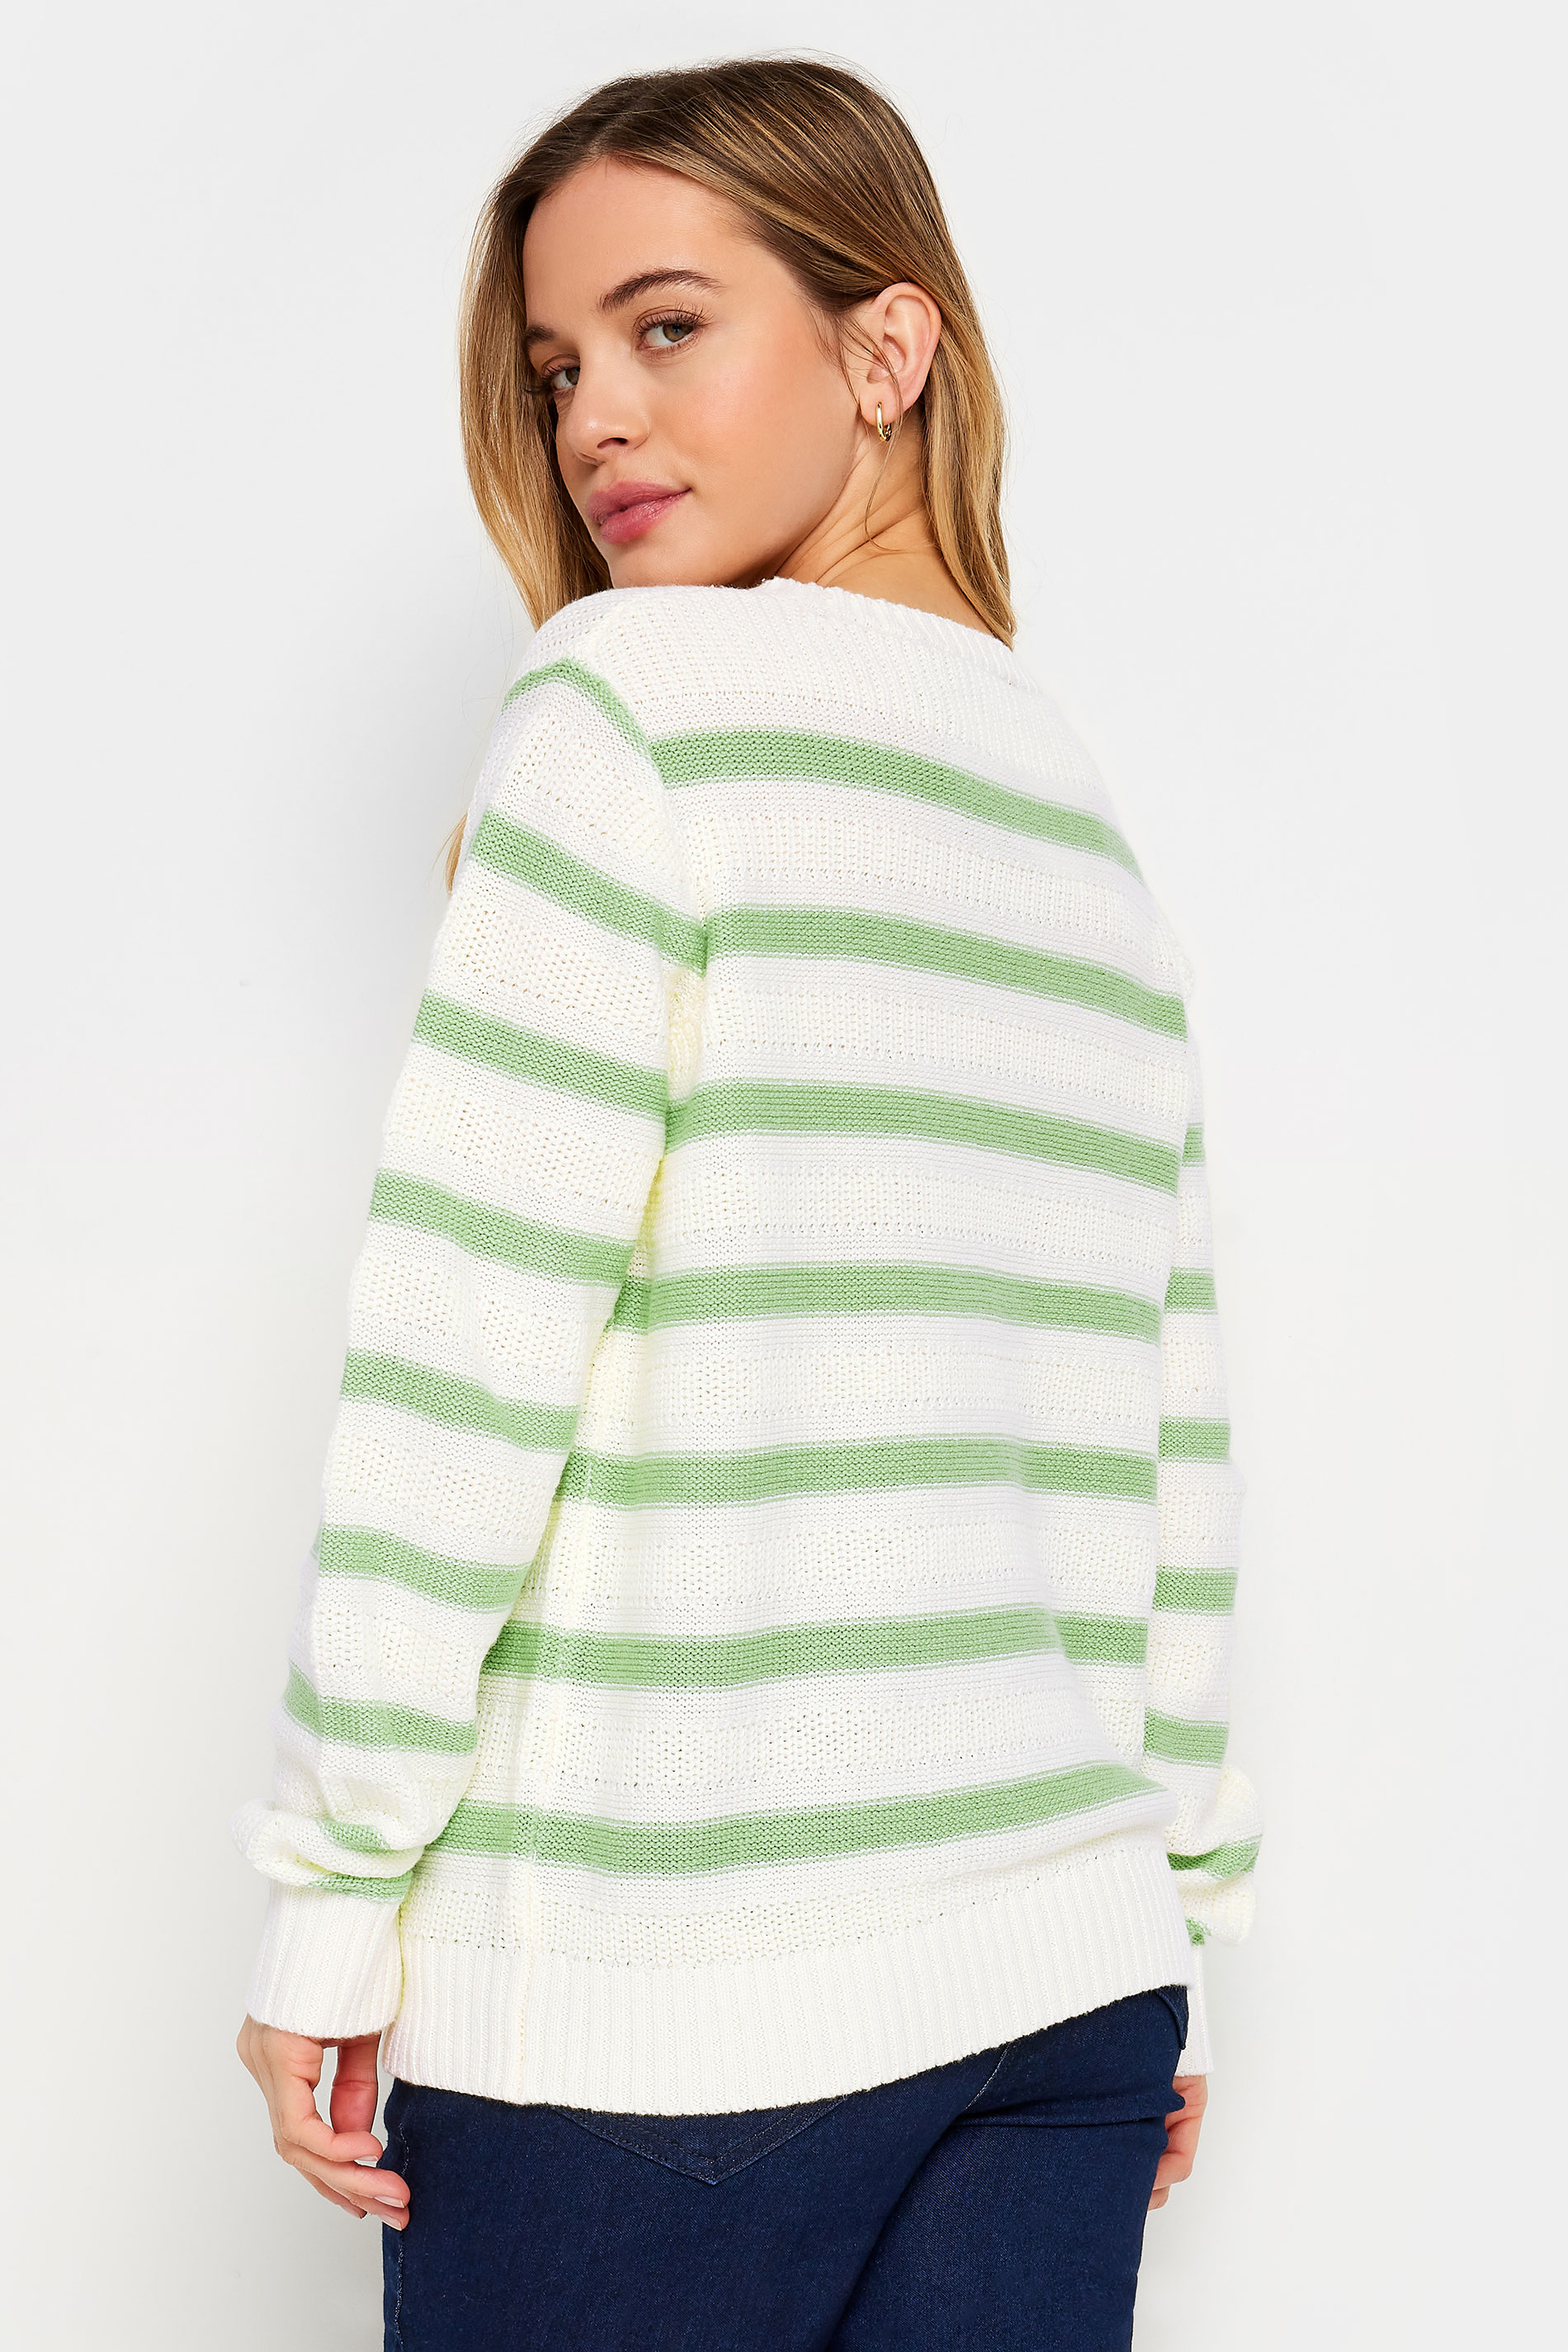 M&Co Petite Green & Ivory Stripe Jumper | M&Co 3